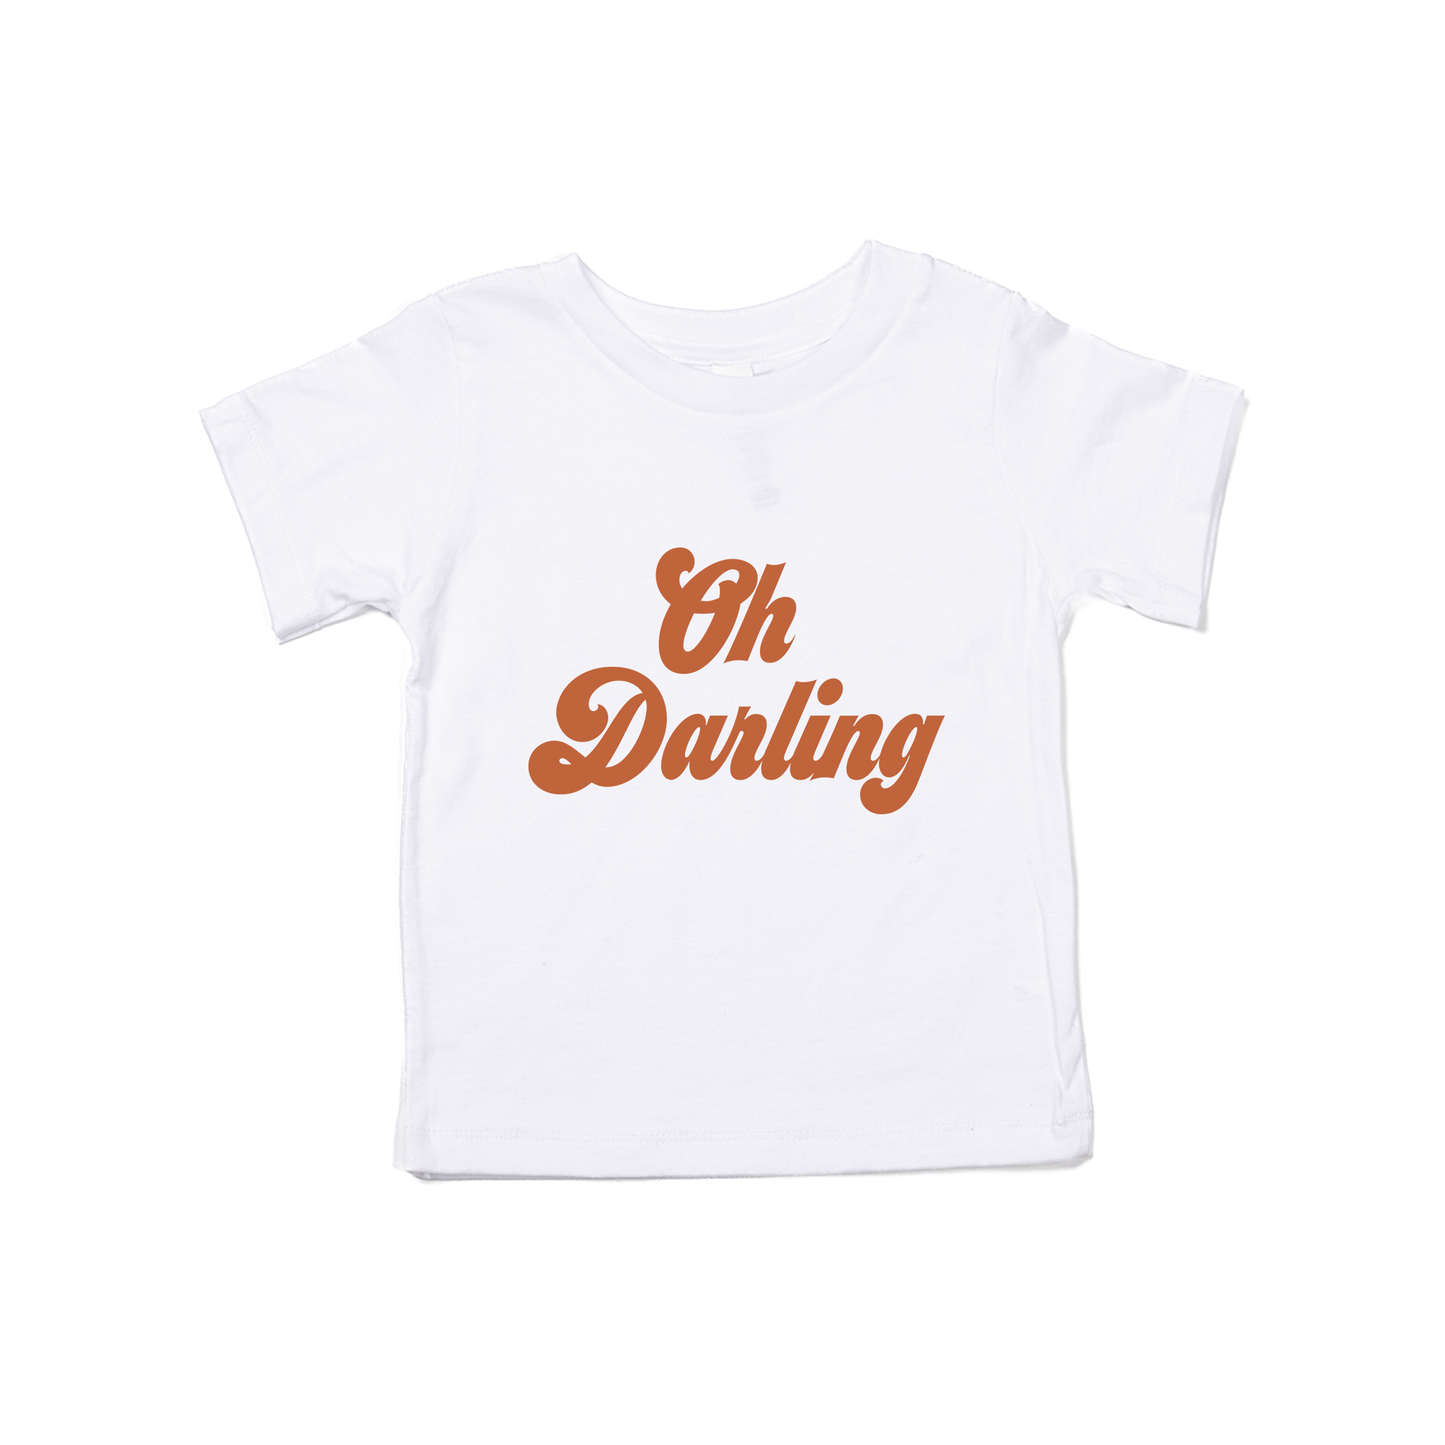 Oh Darling (Rust) - Kids Tee (White)